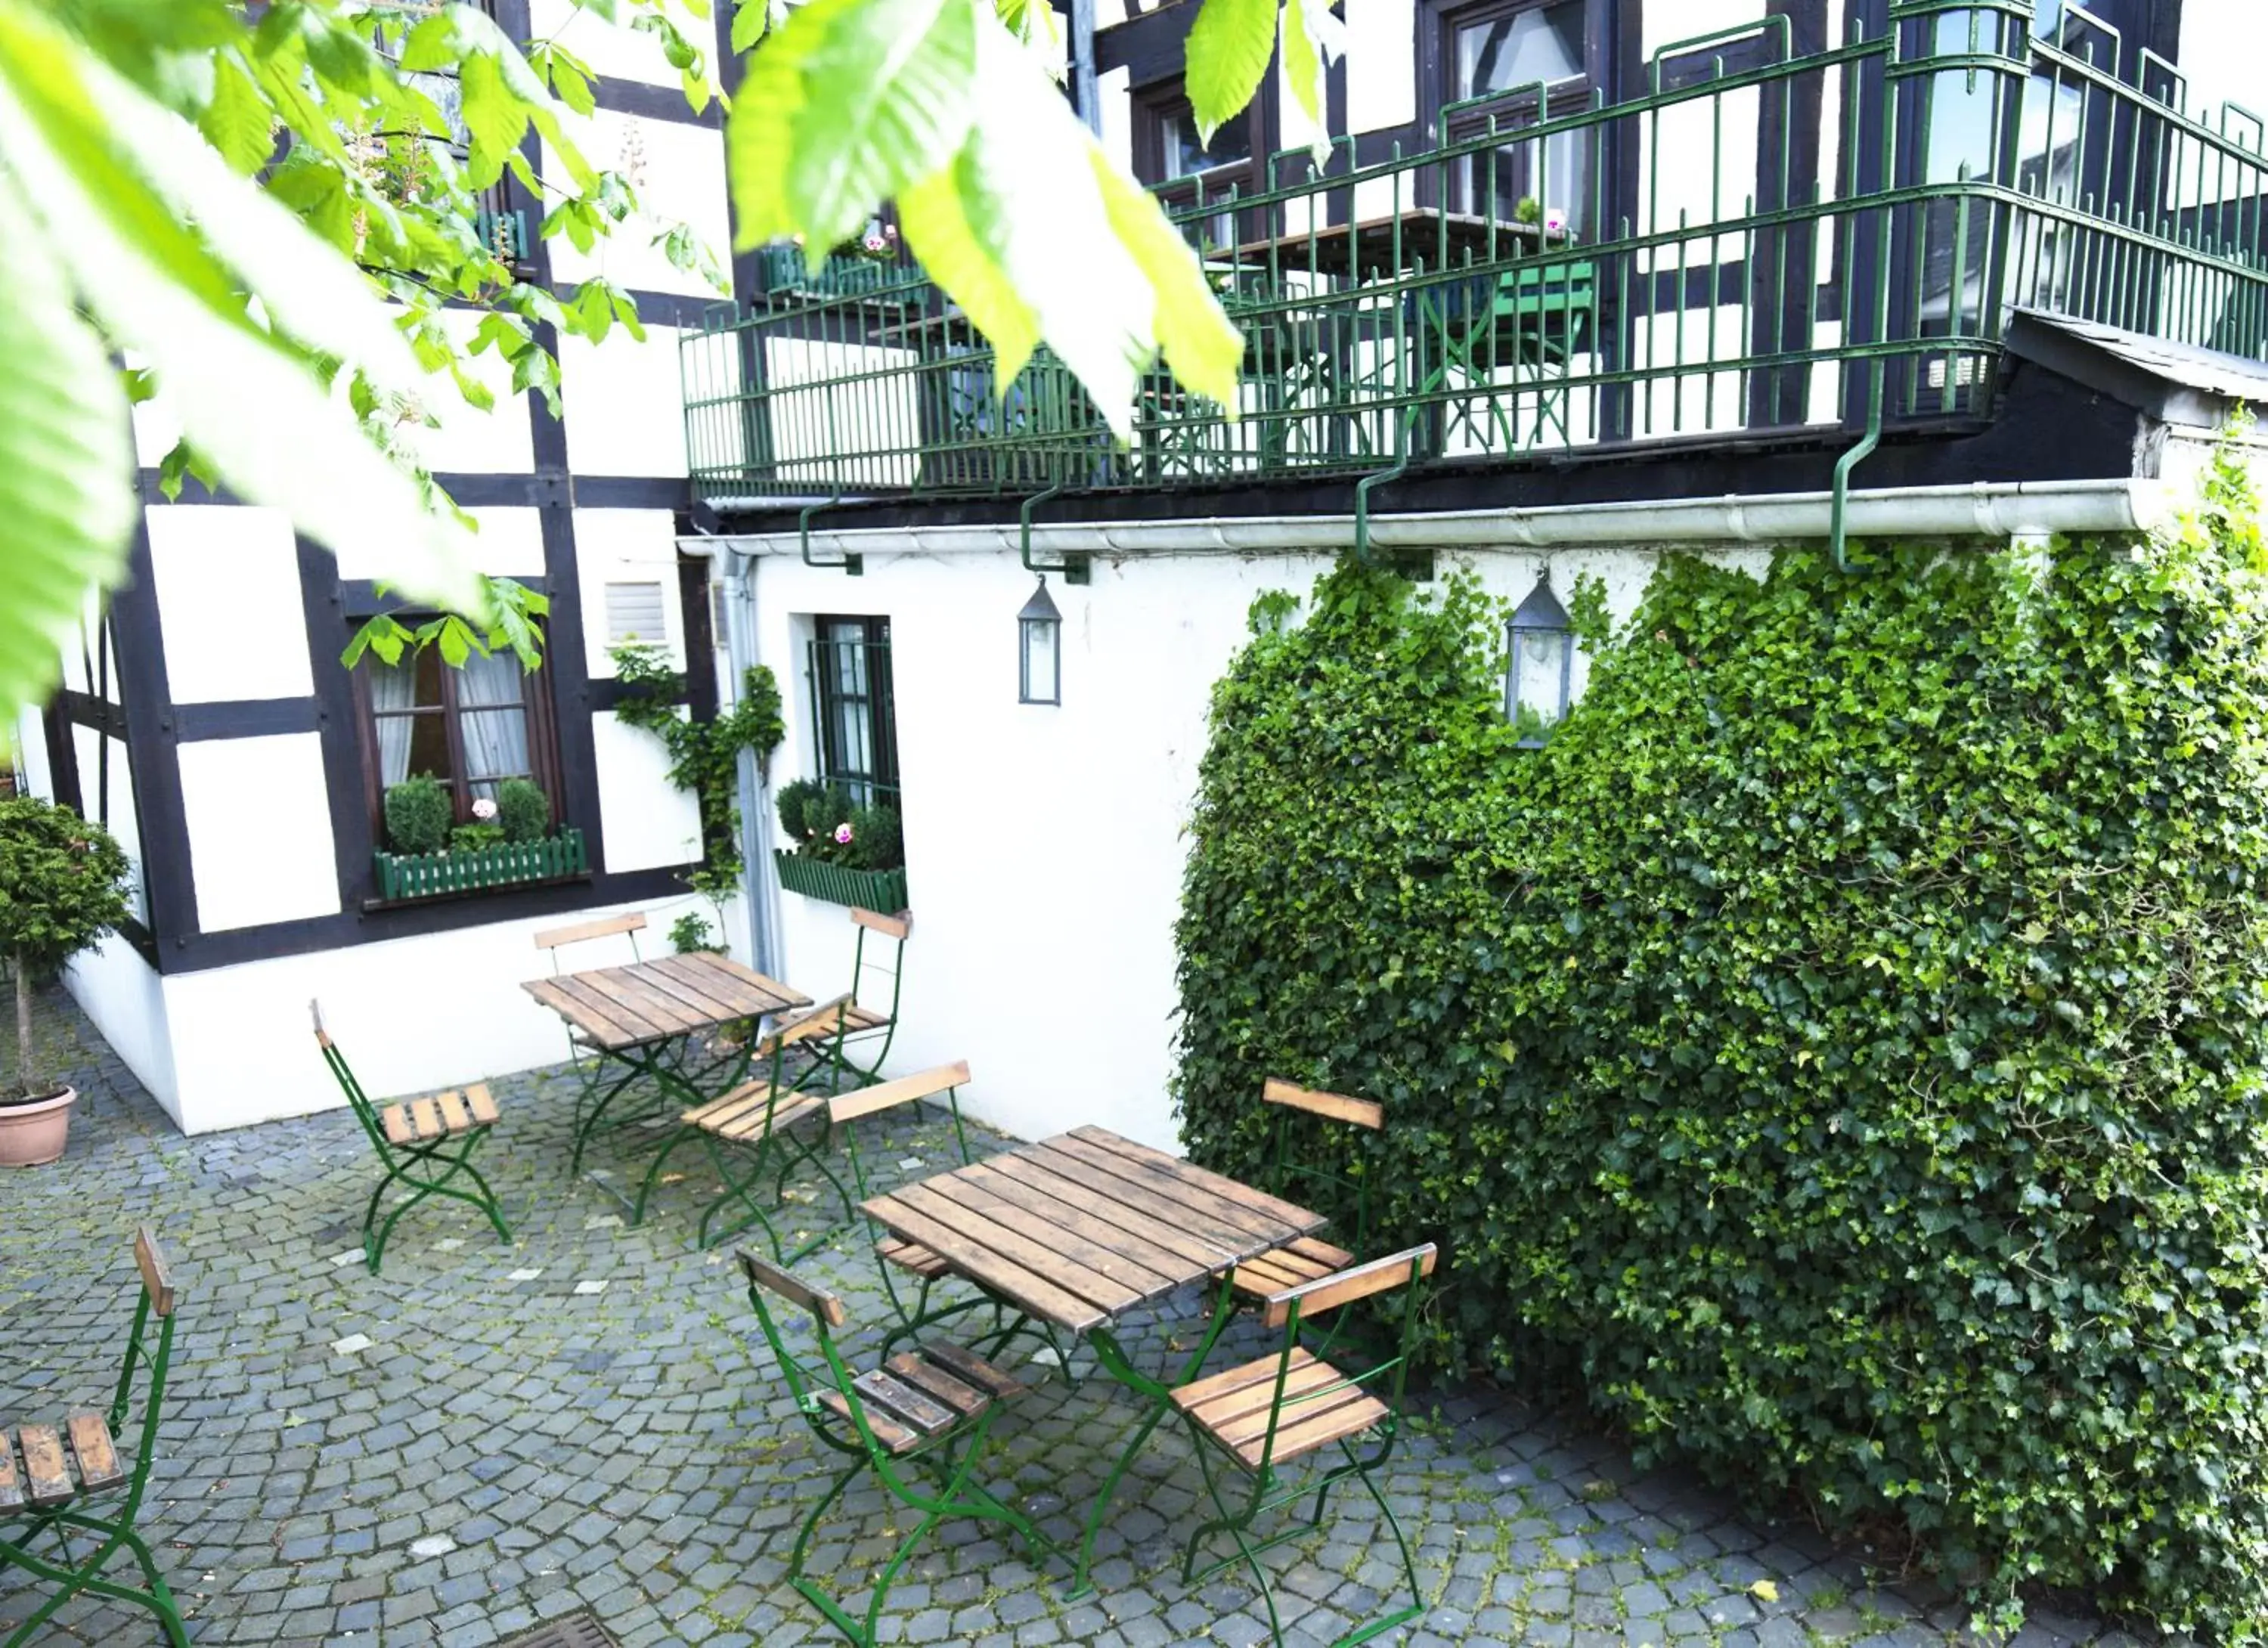 Area and facilities in Romantik Hotel Alte Vogtei